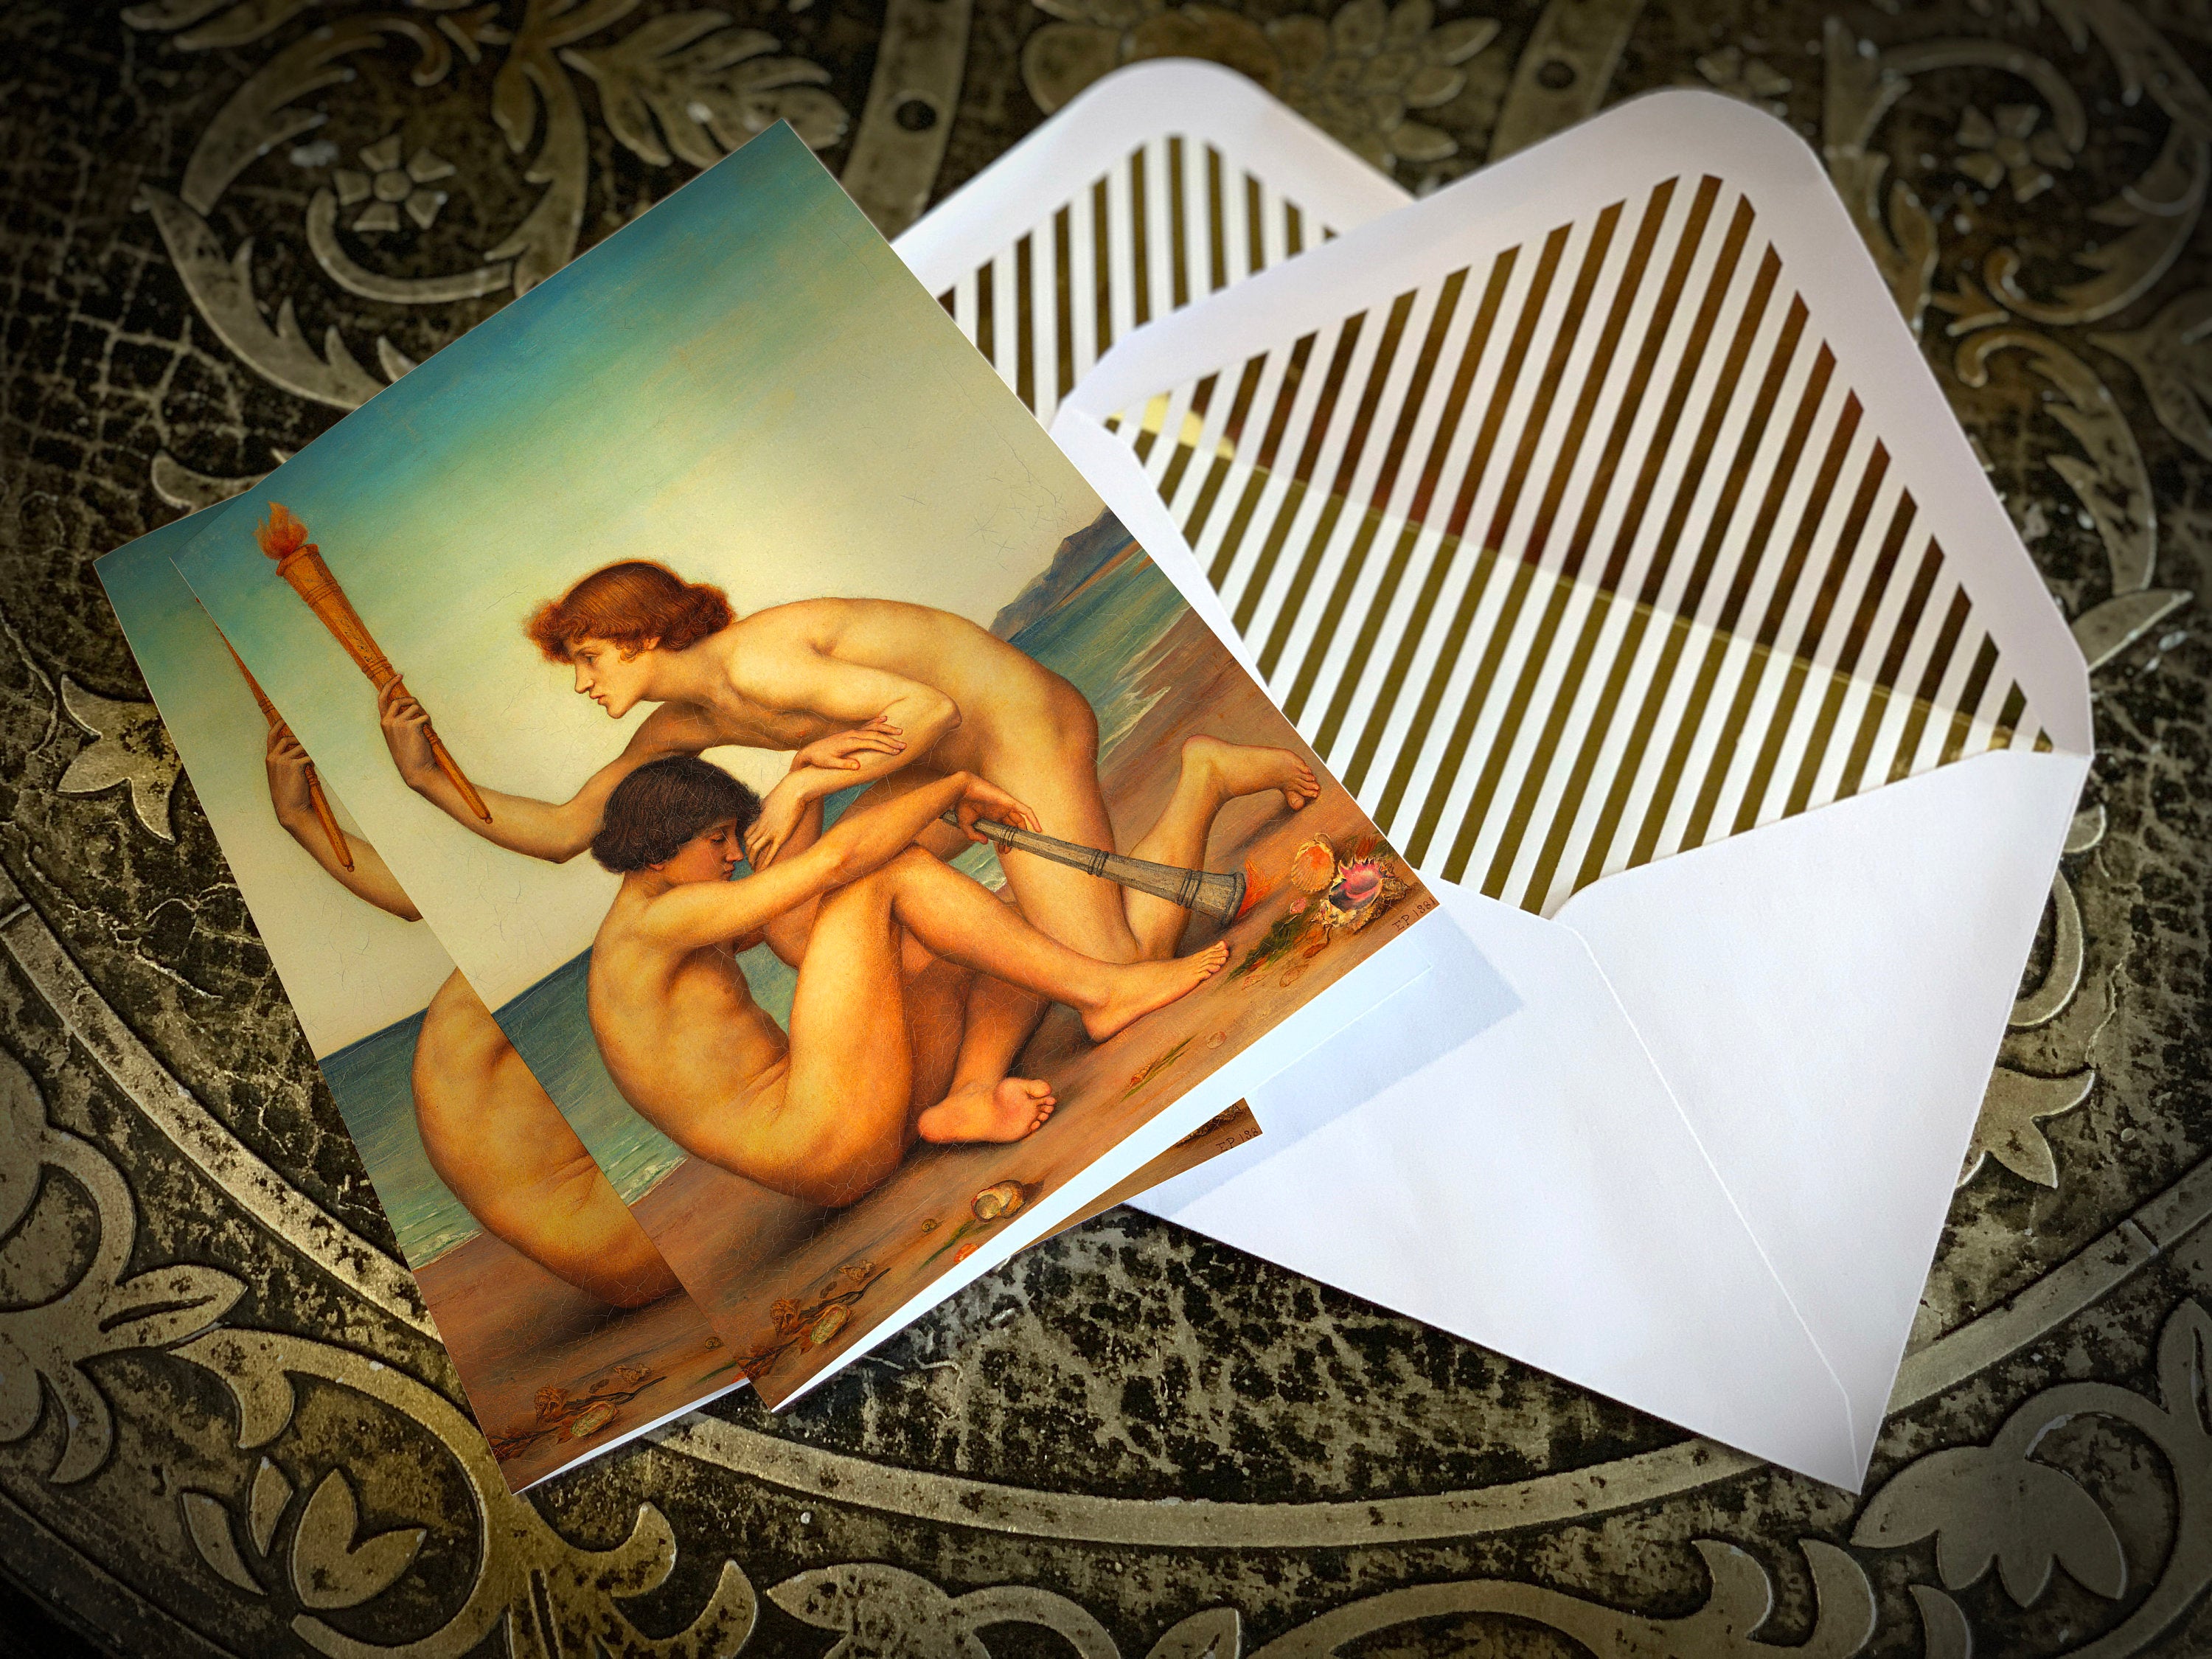 Phosphorus and Hesperus by Evelyn De Morgan, Celestial Greeting Card with Elegant Striped Gold Foil Envelope, 1 Card/Envelope